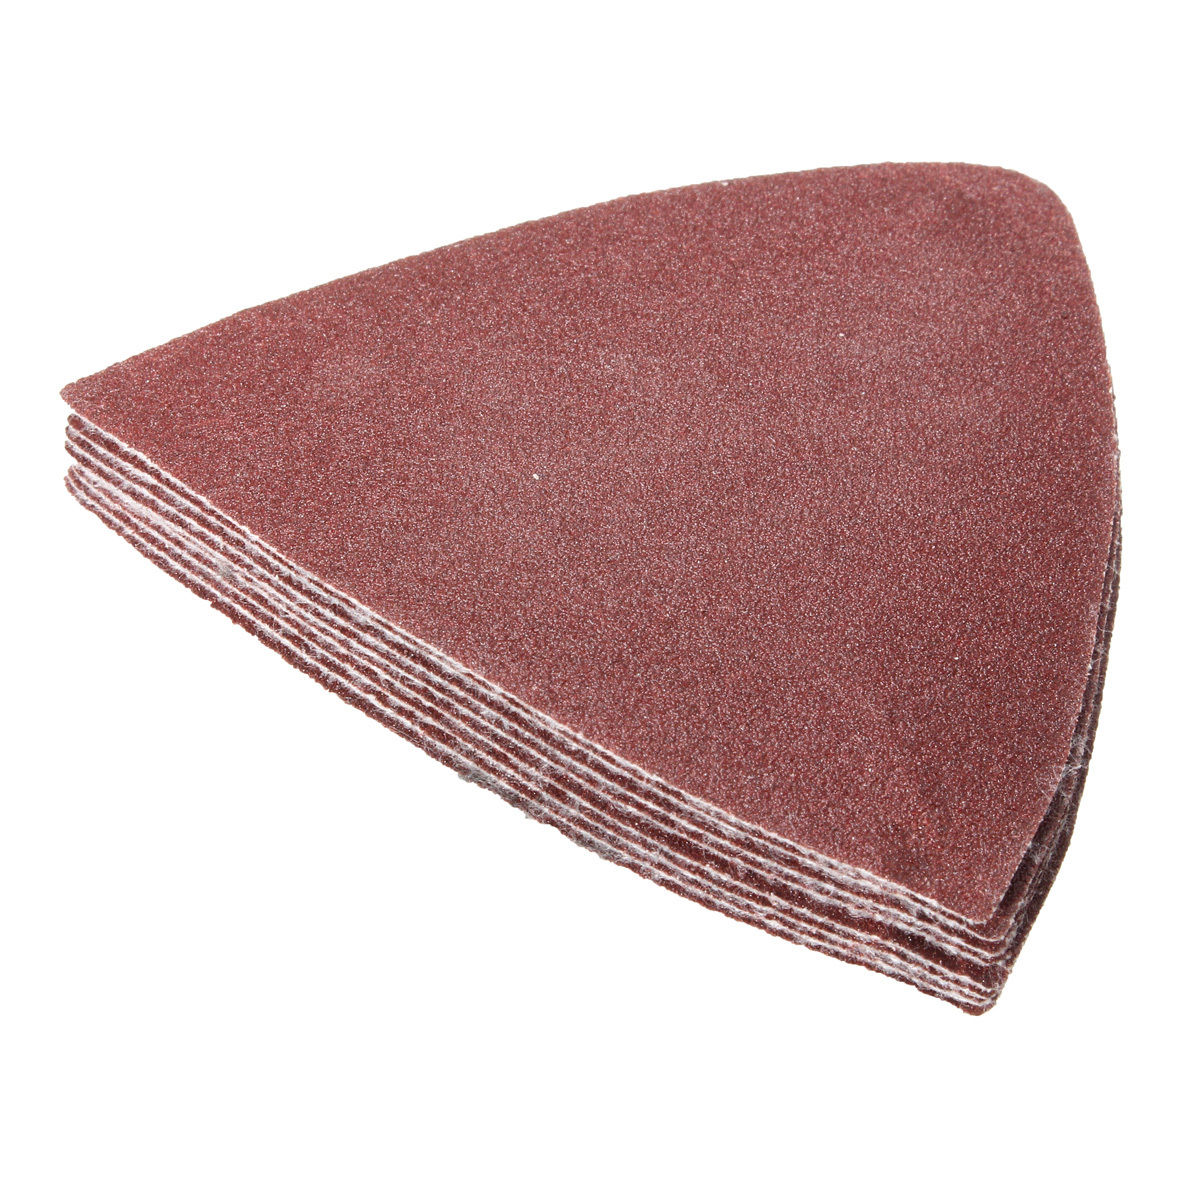 32Pcs 60/80/120/240 Red Grit Sanding Sheet Discs Triangle Grinder Sandpaper Pad 80mm Oscillating Abrasive Polishing Tool